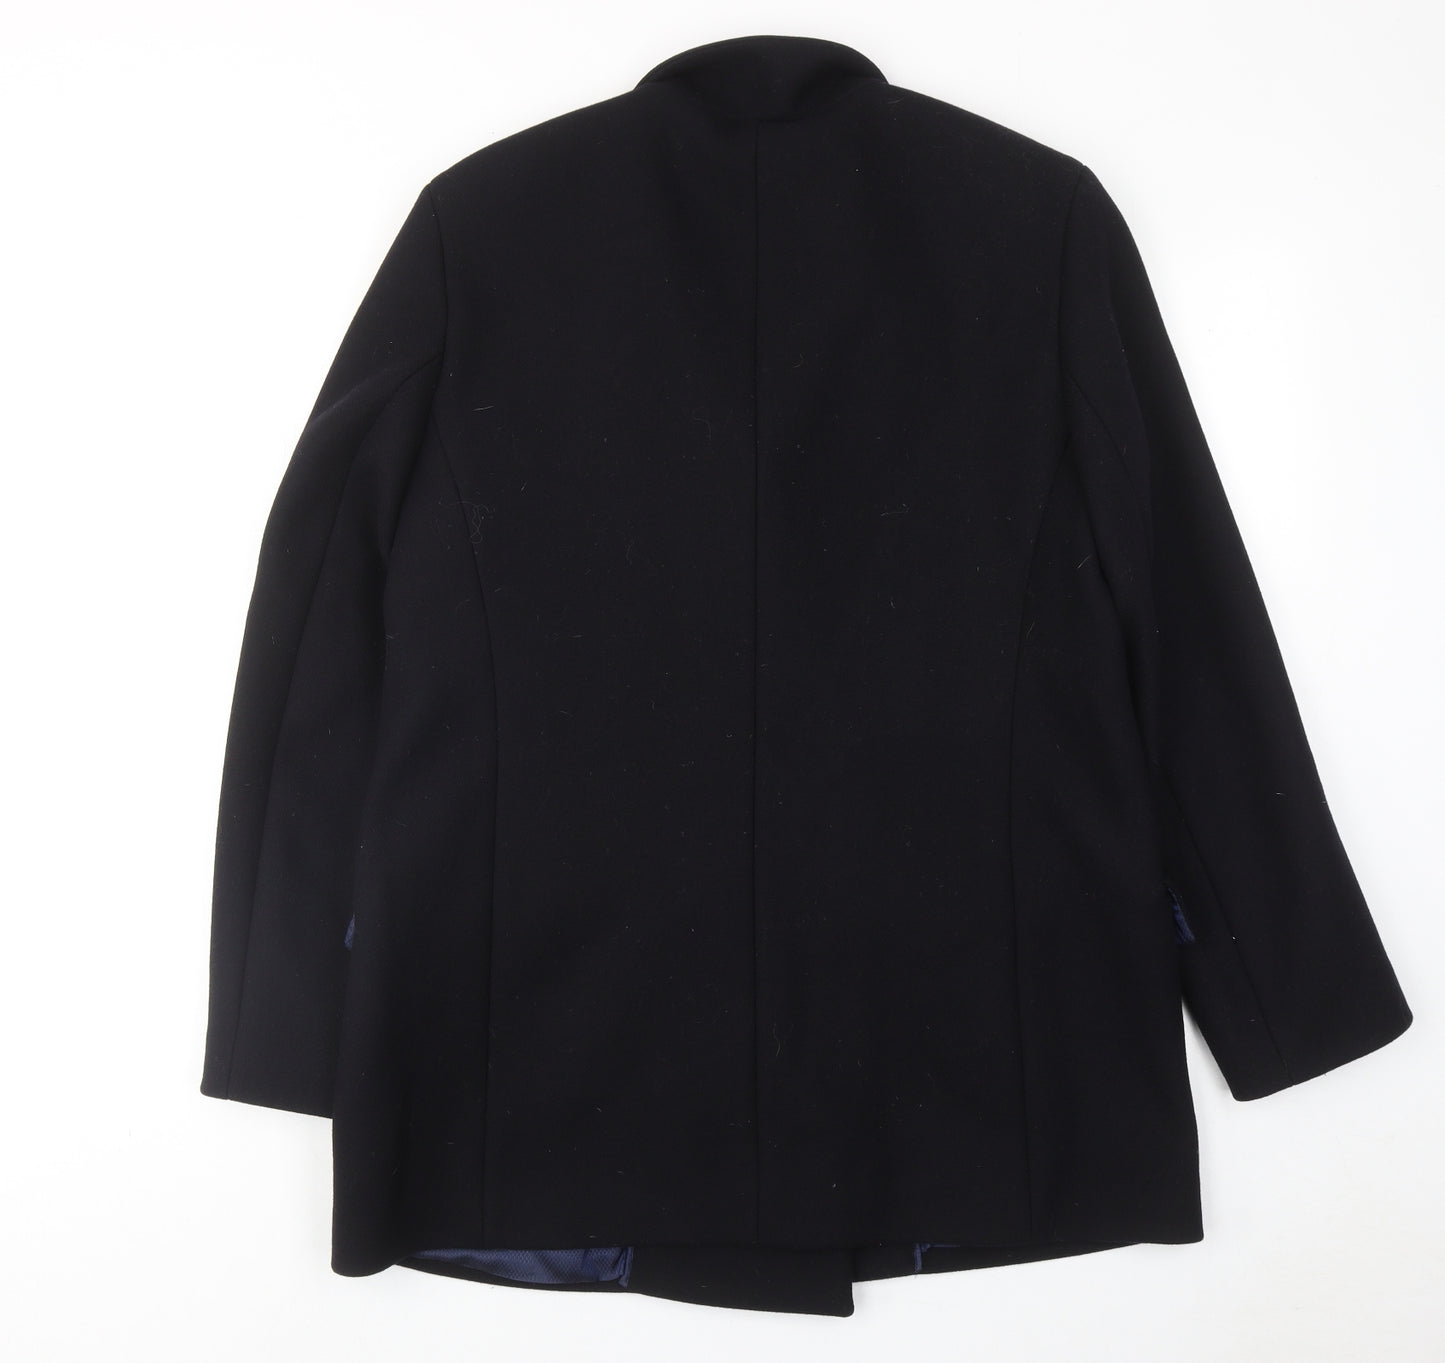 NICOLE FARHI Womens Blue Jacket Blazer Size 16 Button